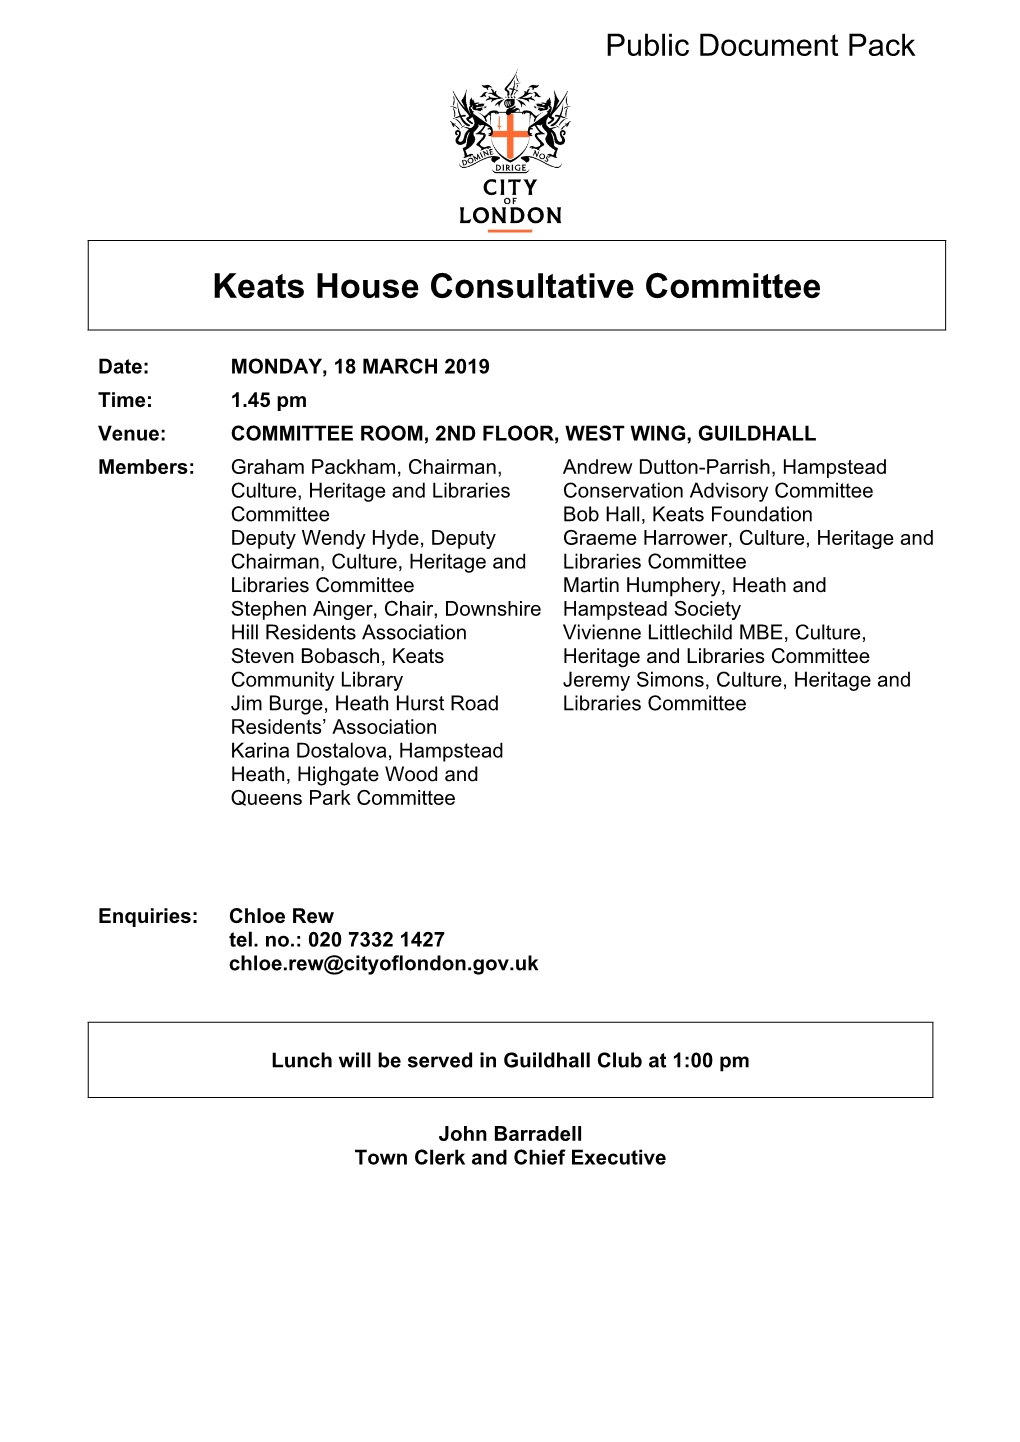 (Public Pack)Agenda Document for Keats House Consultative